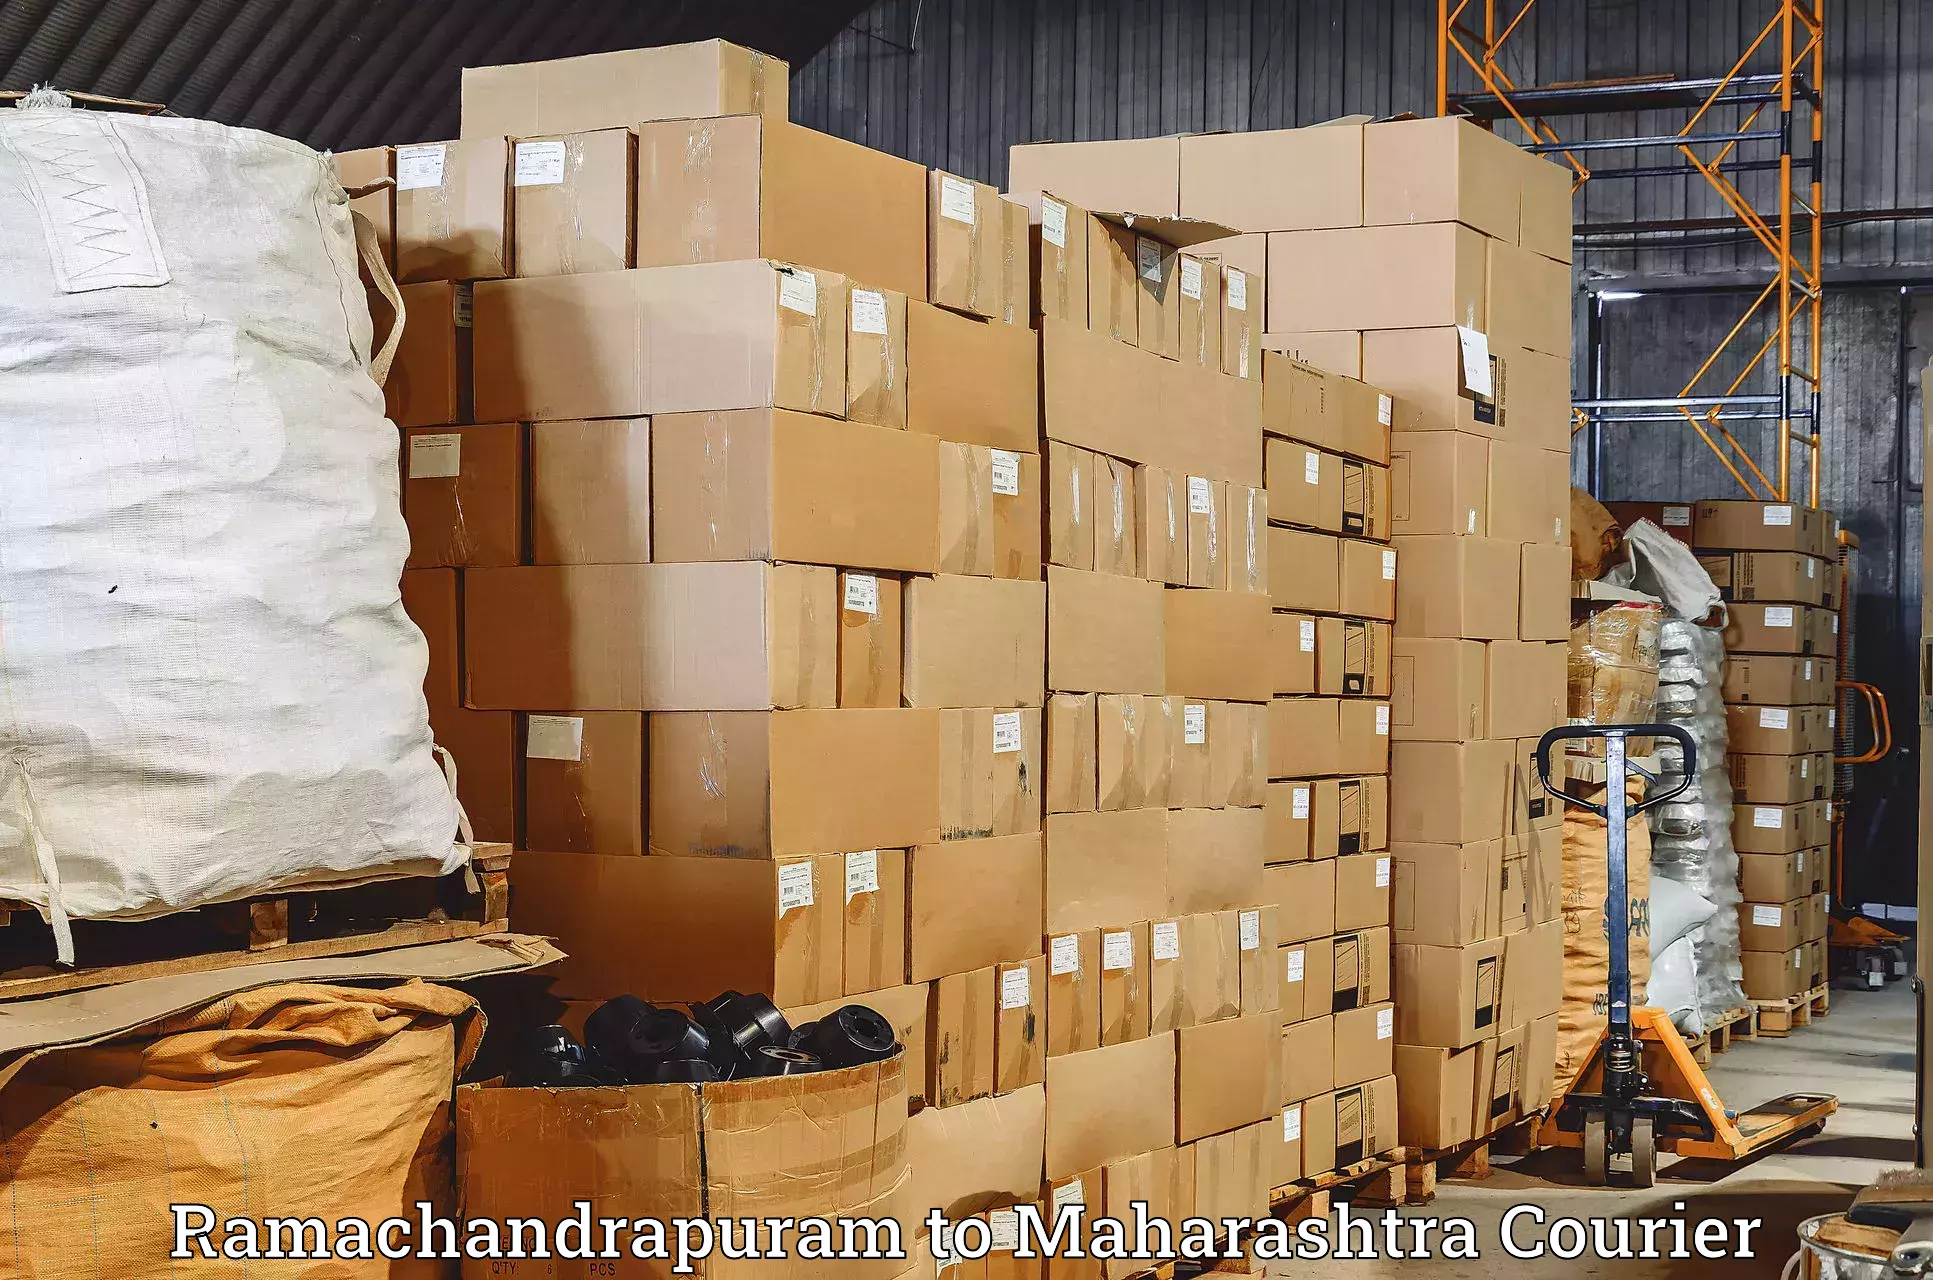 State-of-the-art courier technology Ramachandrapuram to Maharashtra